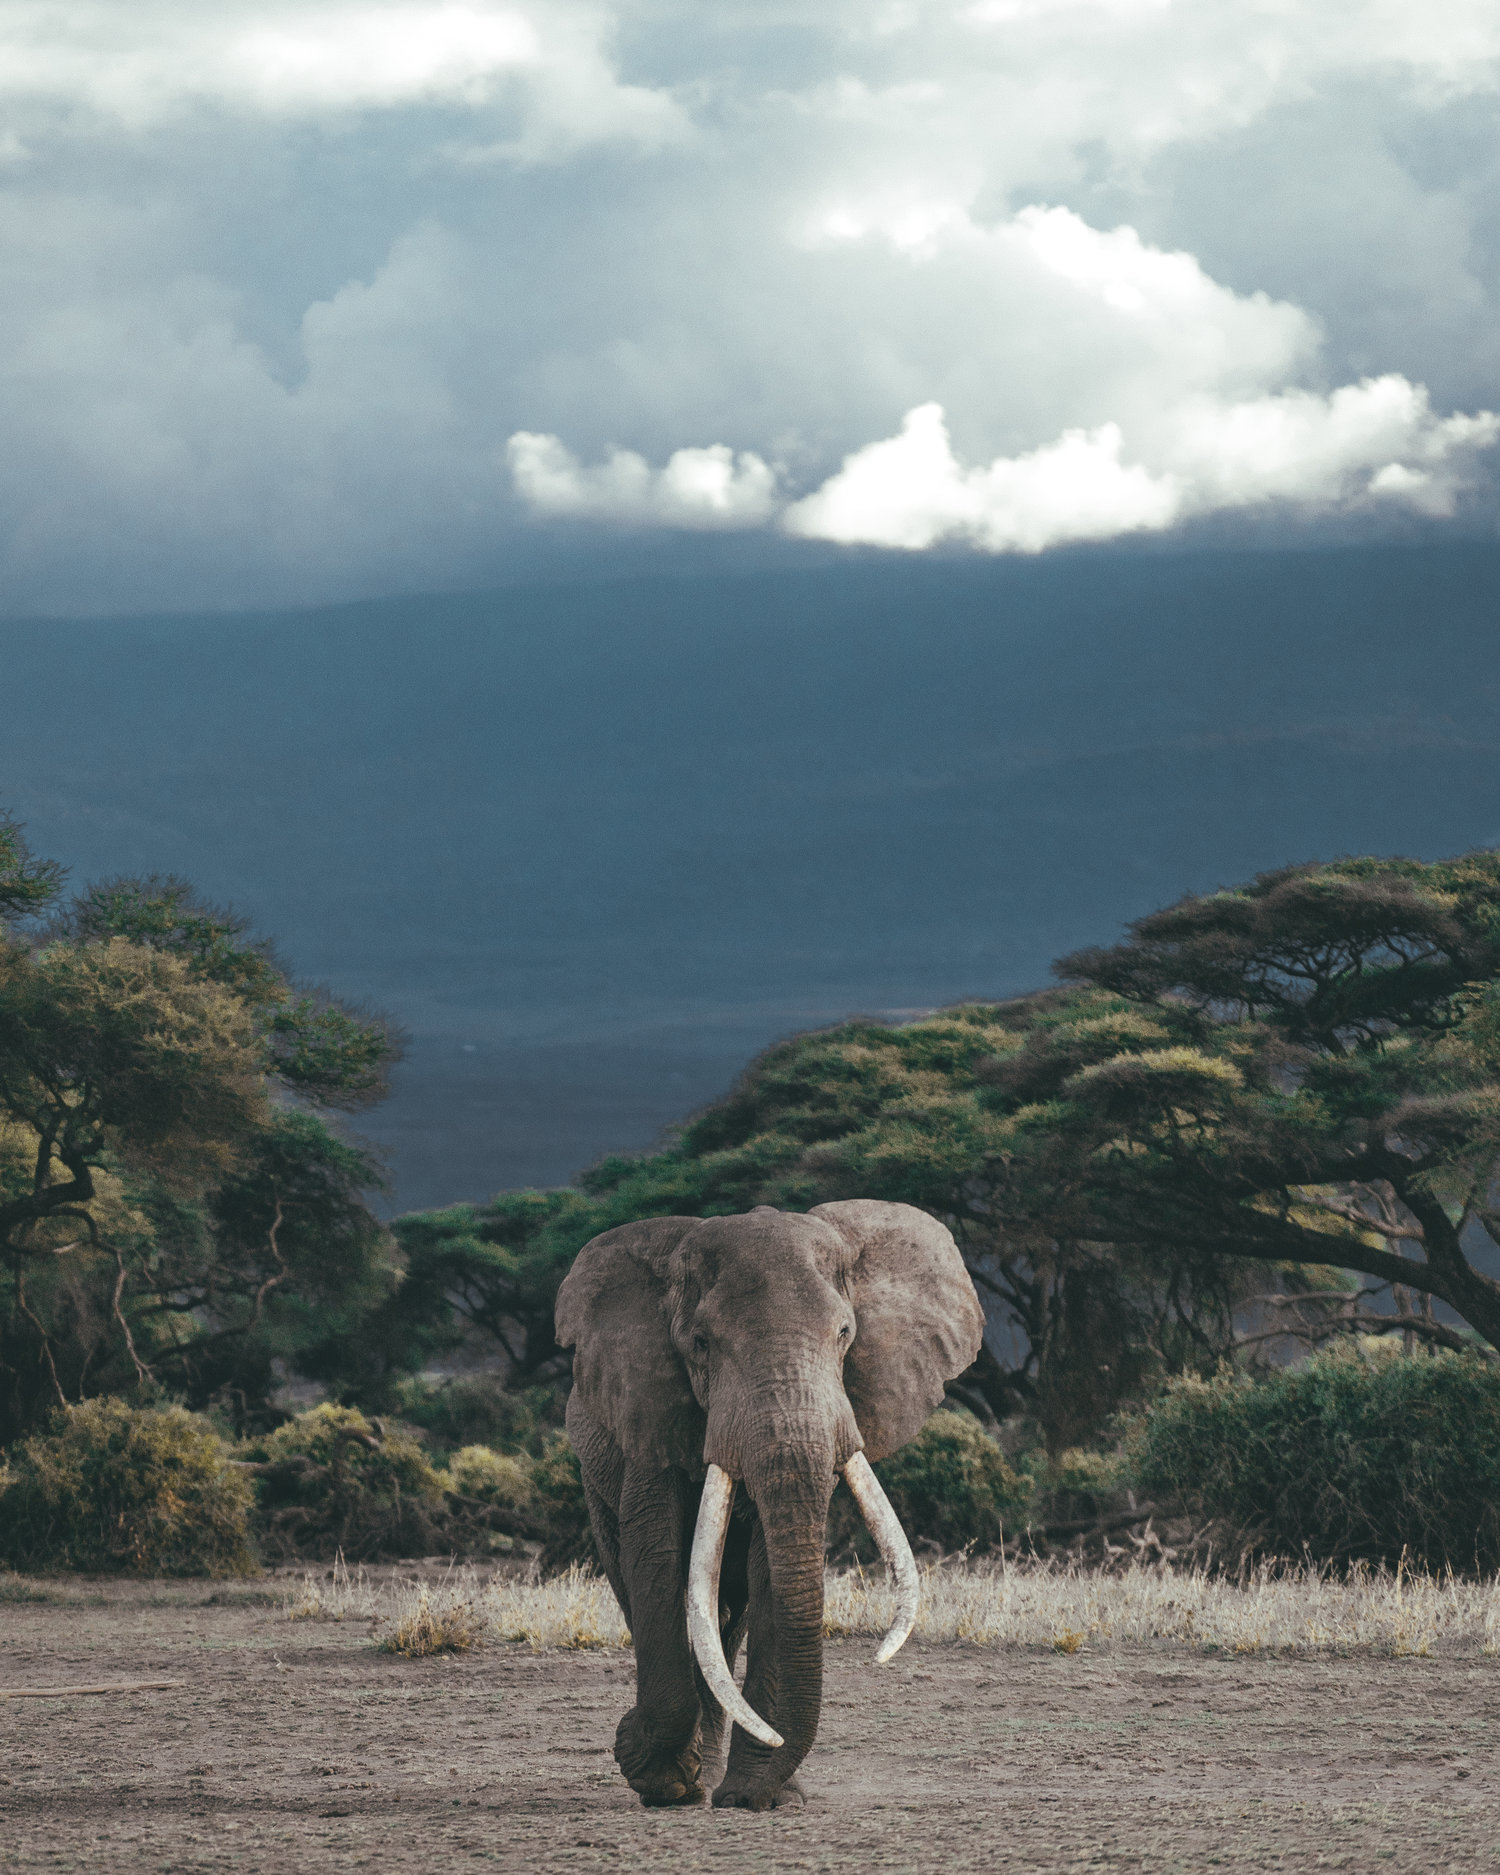 Elephant in Kenya